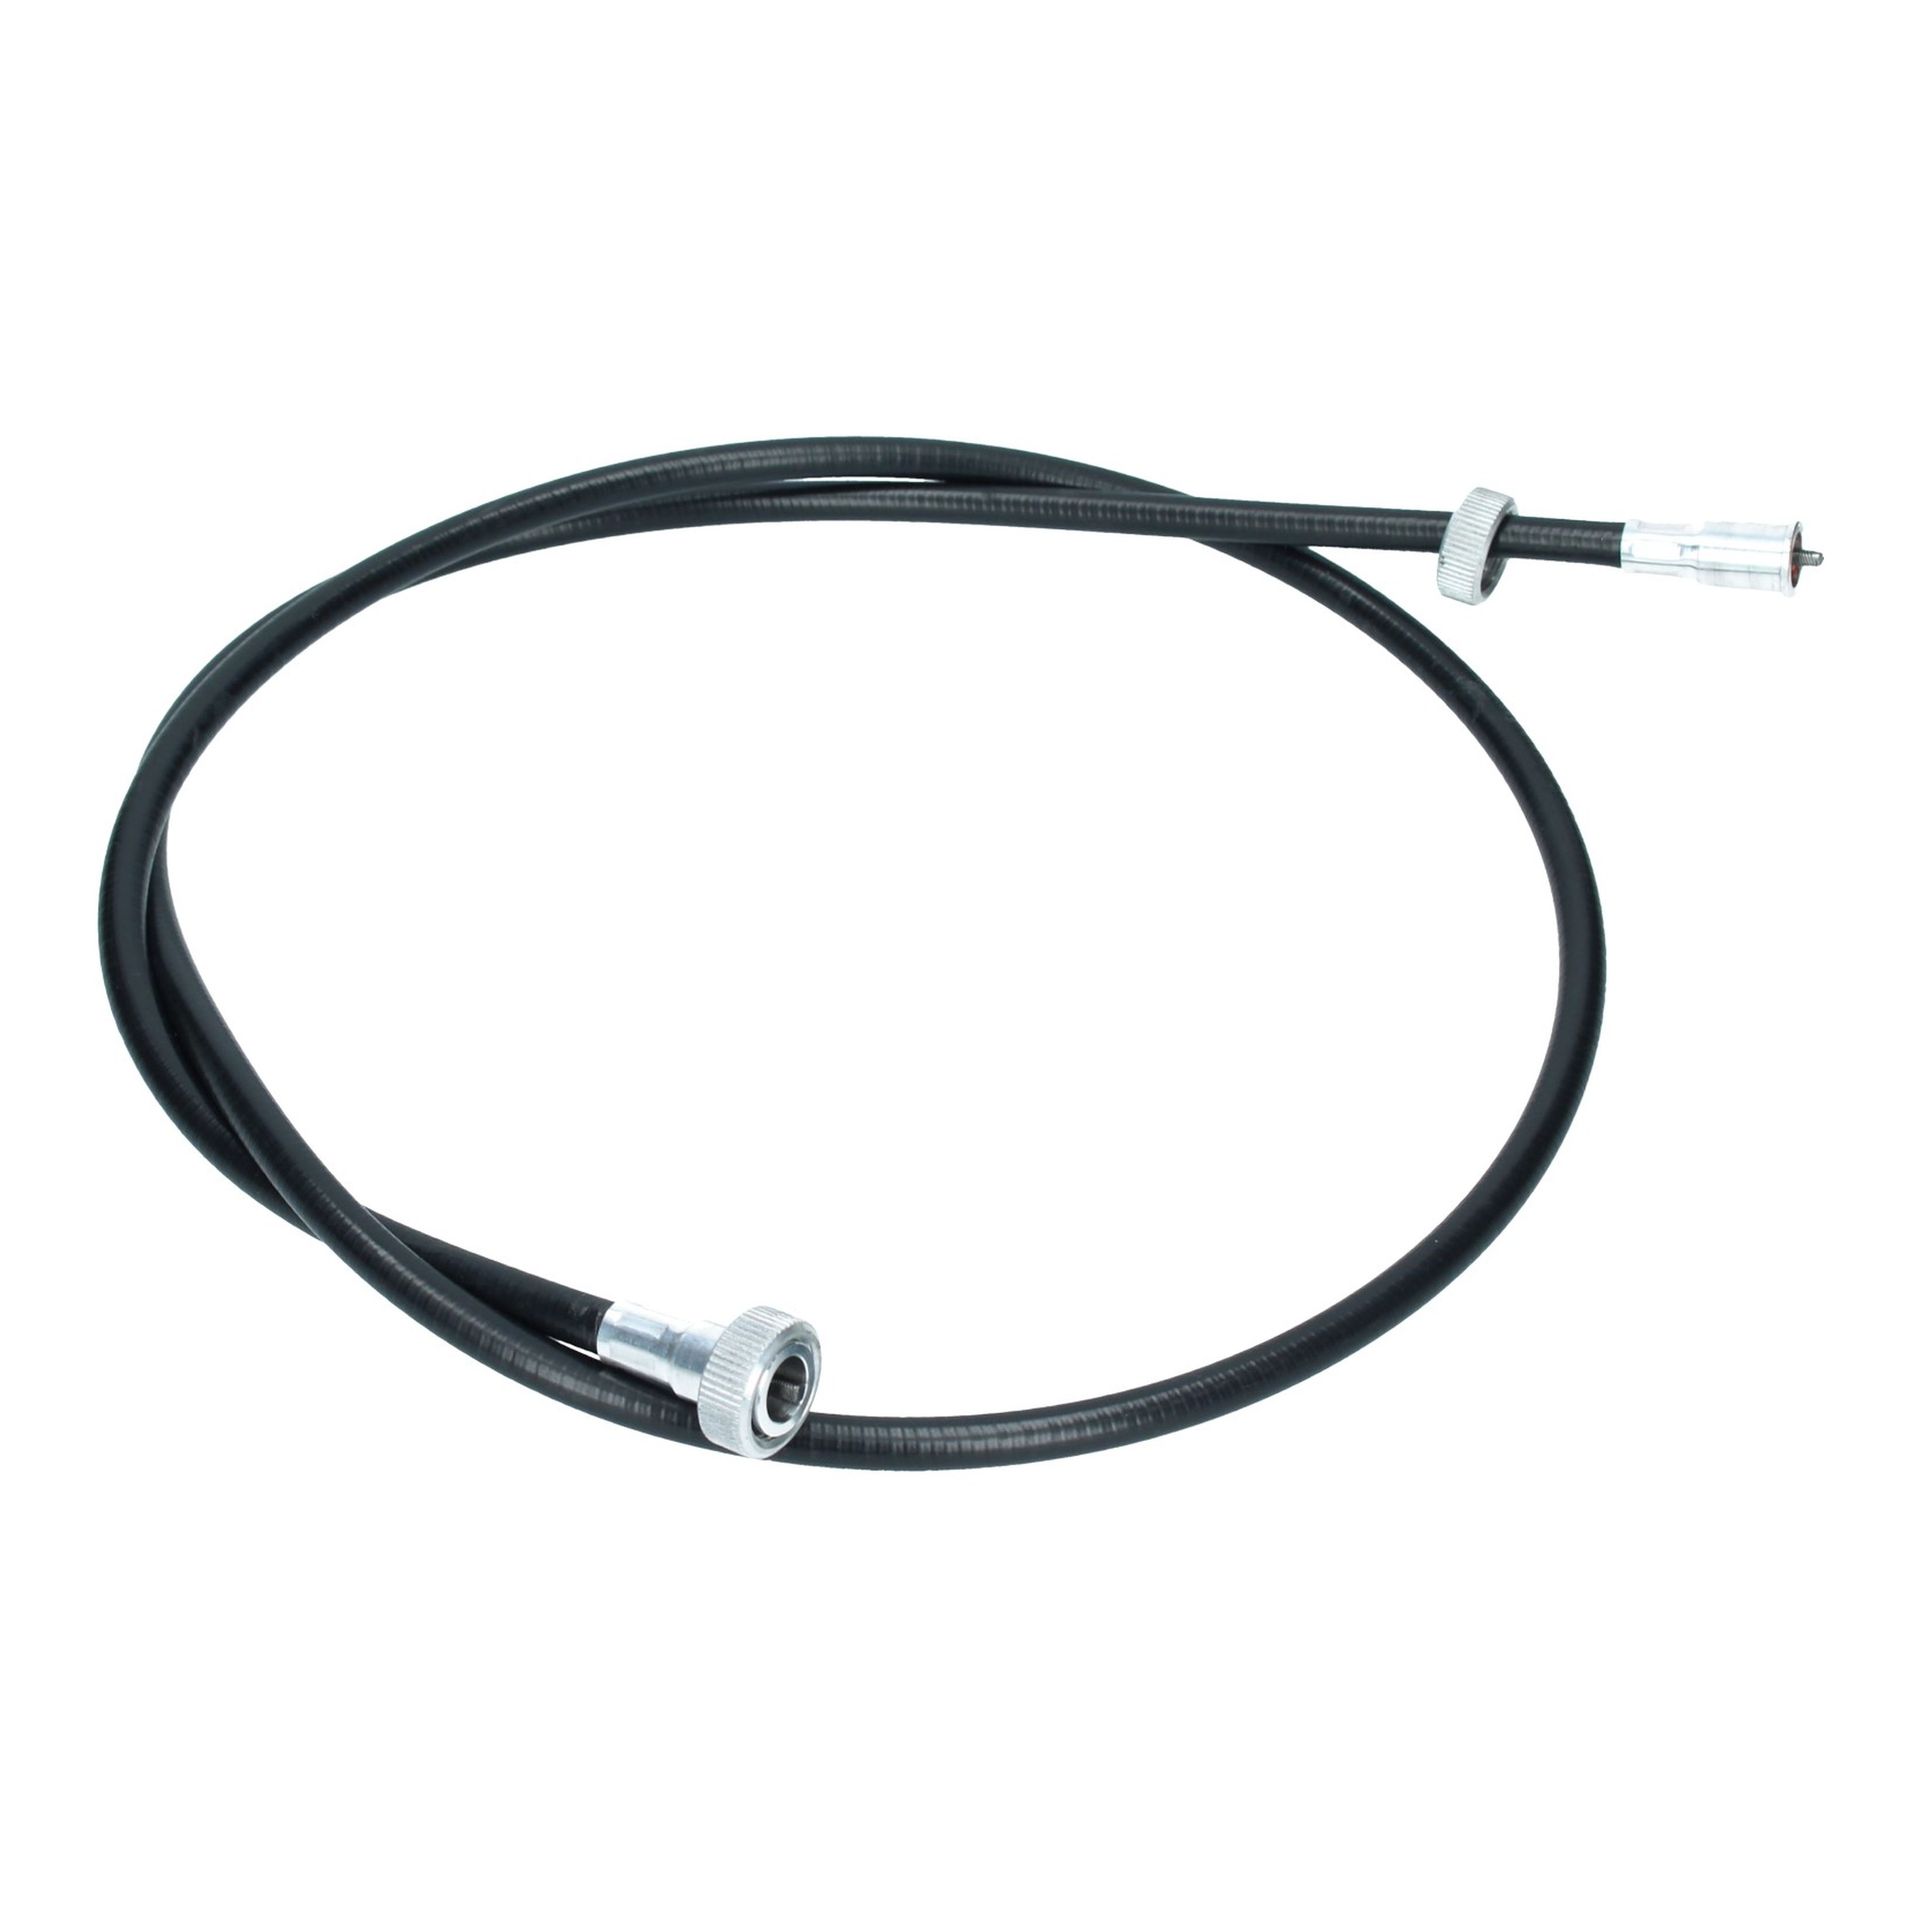 Speedo Cable 275 (85.5" long)